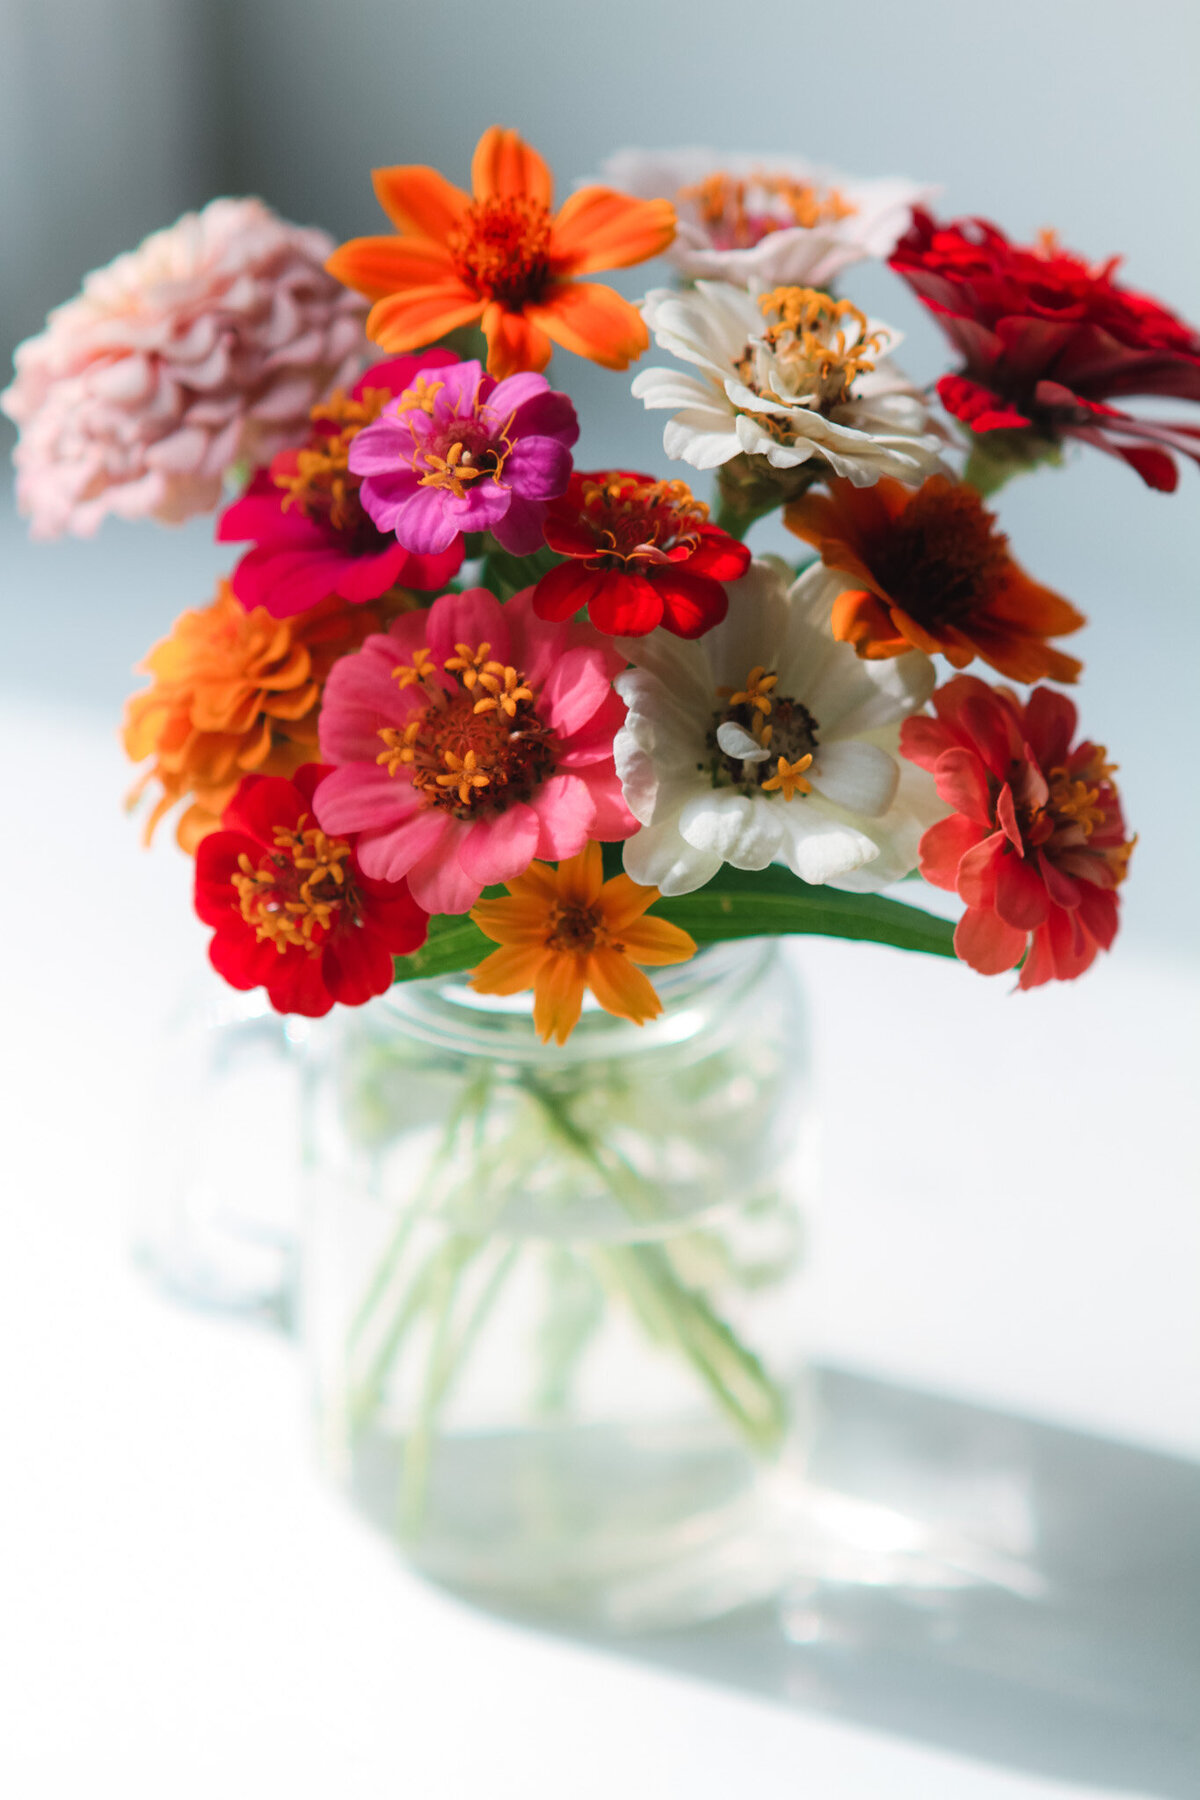 zinnias-thumbelina-garden-flowers-mixed-colors